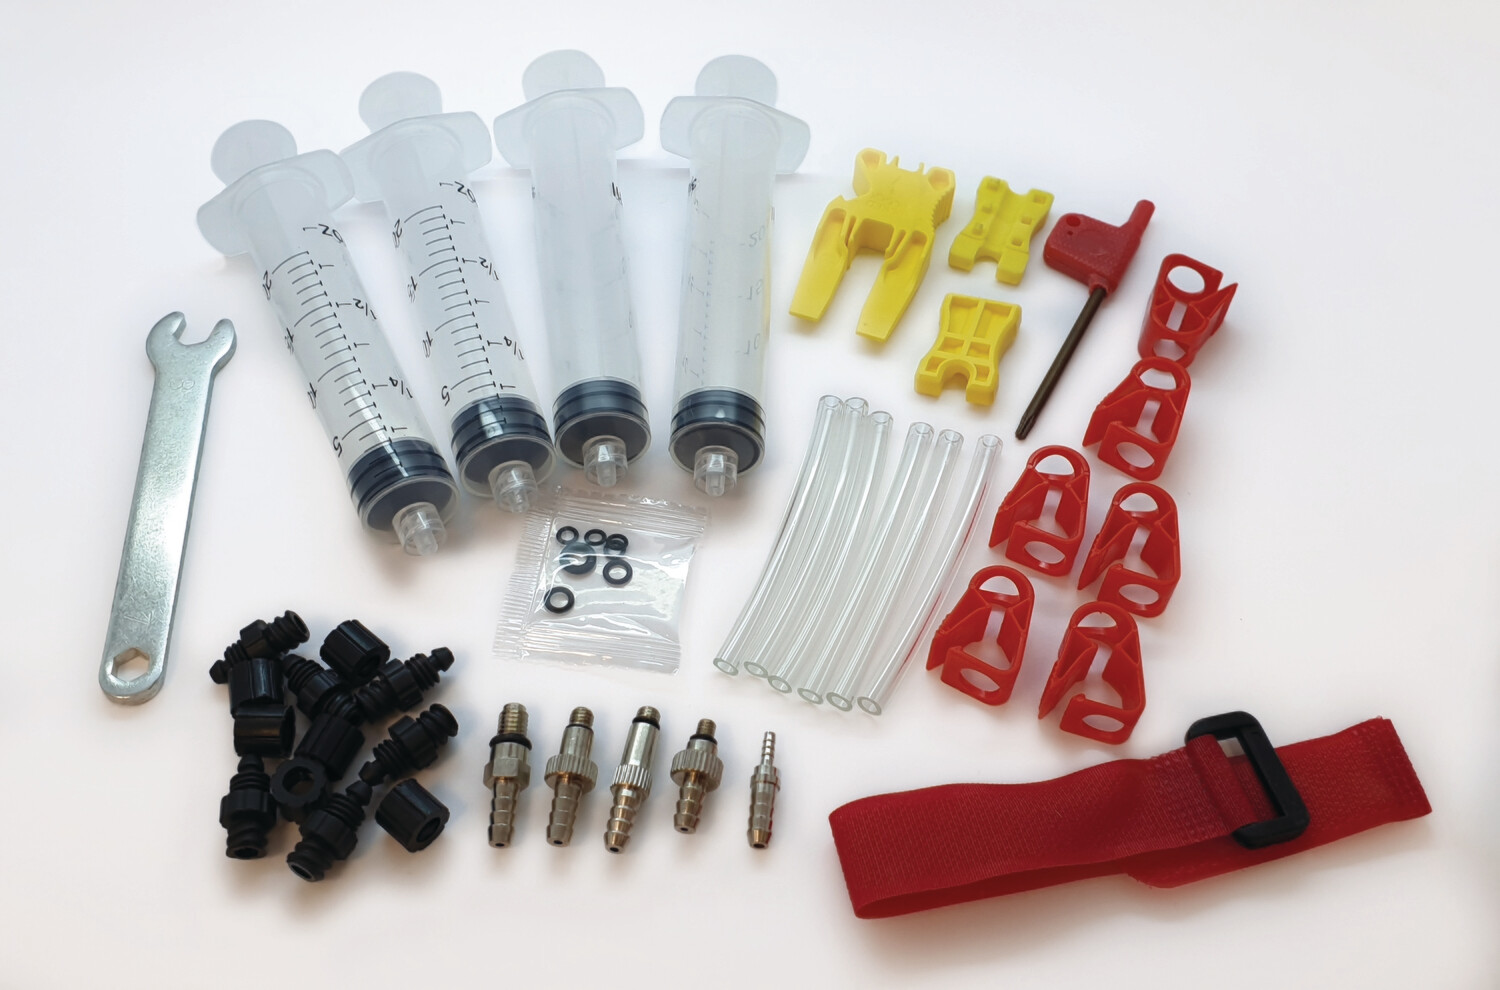 DOT Oil - Pro Bleed Kit Suitable for Avid, SRAM, Hope, Formula,
Hayes, Bengal